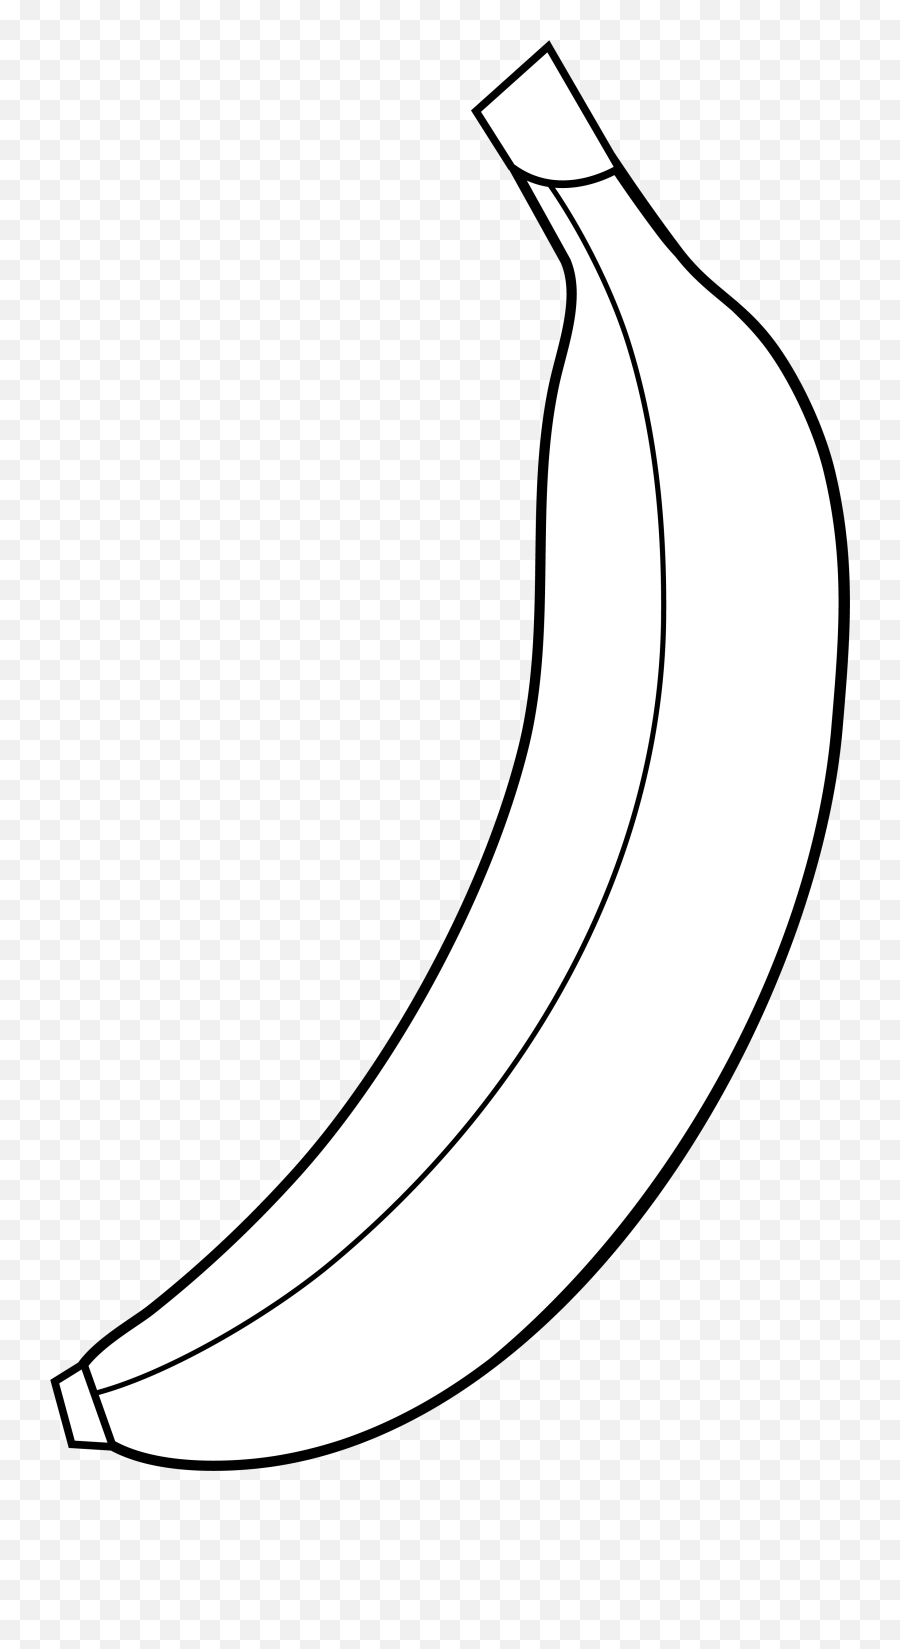 Download Banana 5 Image Png Images Clipart Free - Outline Black And White Banana,Bannana Png